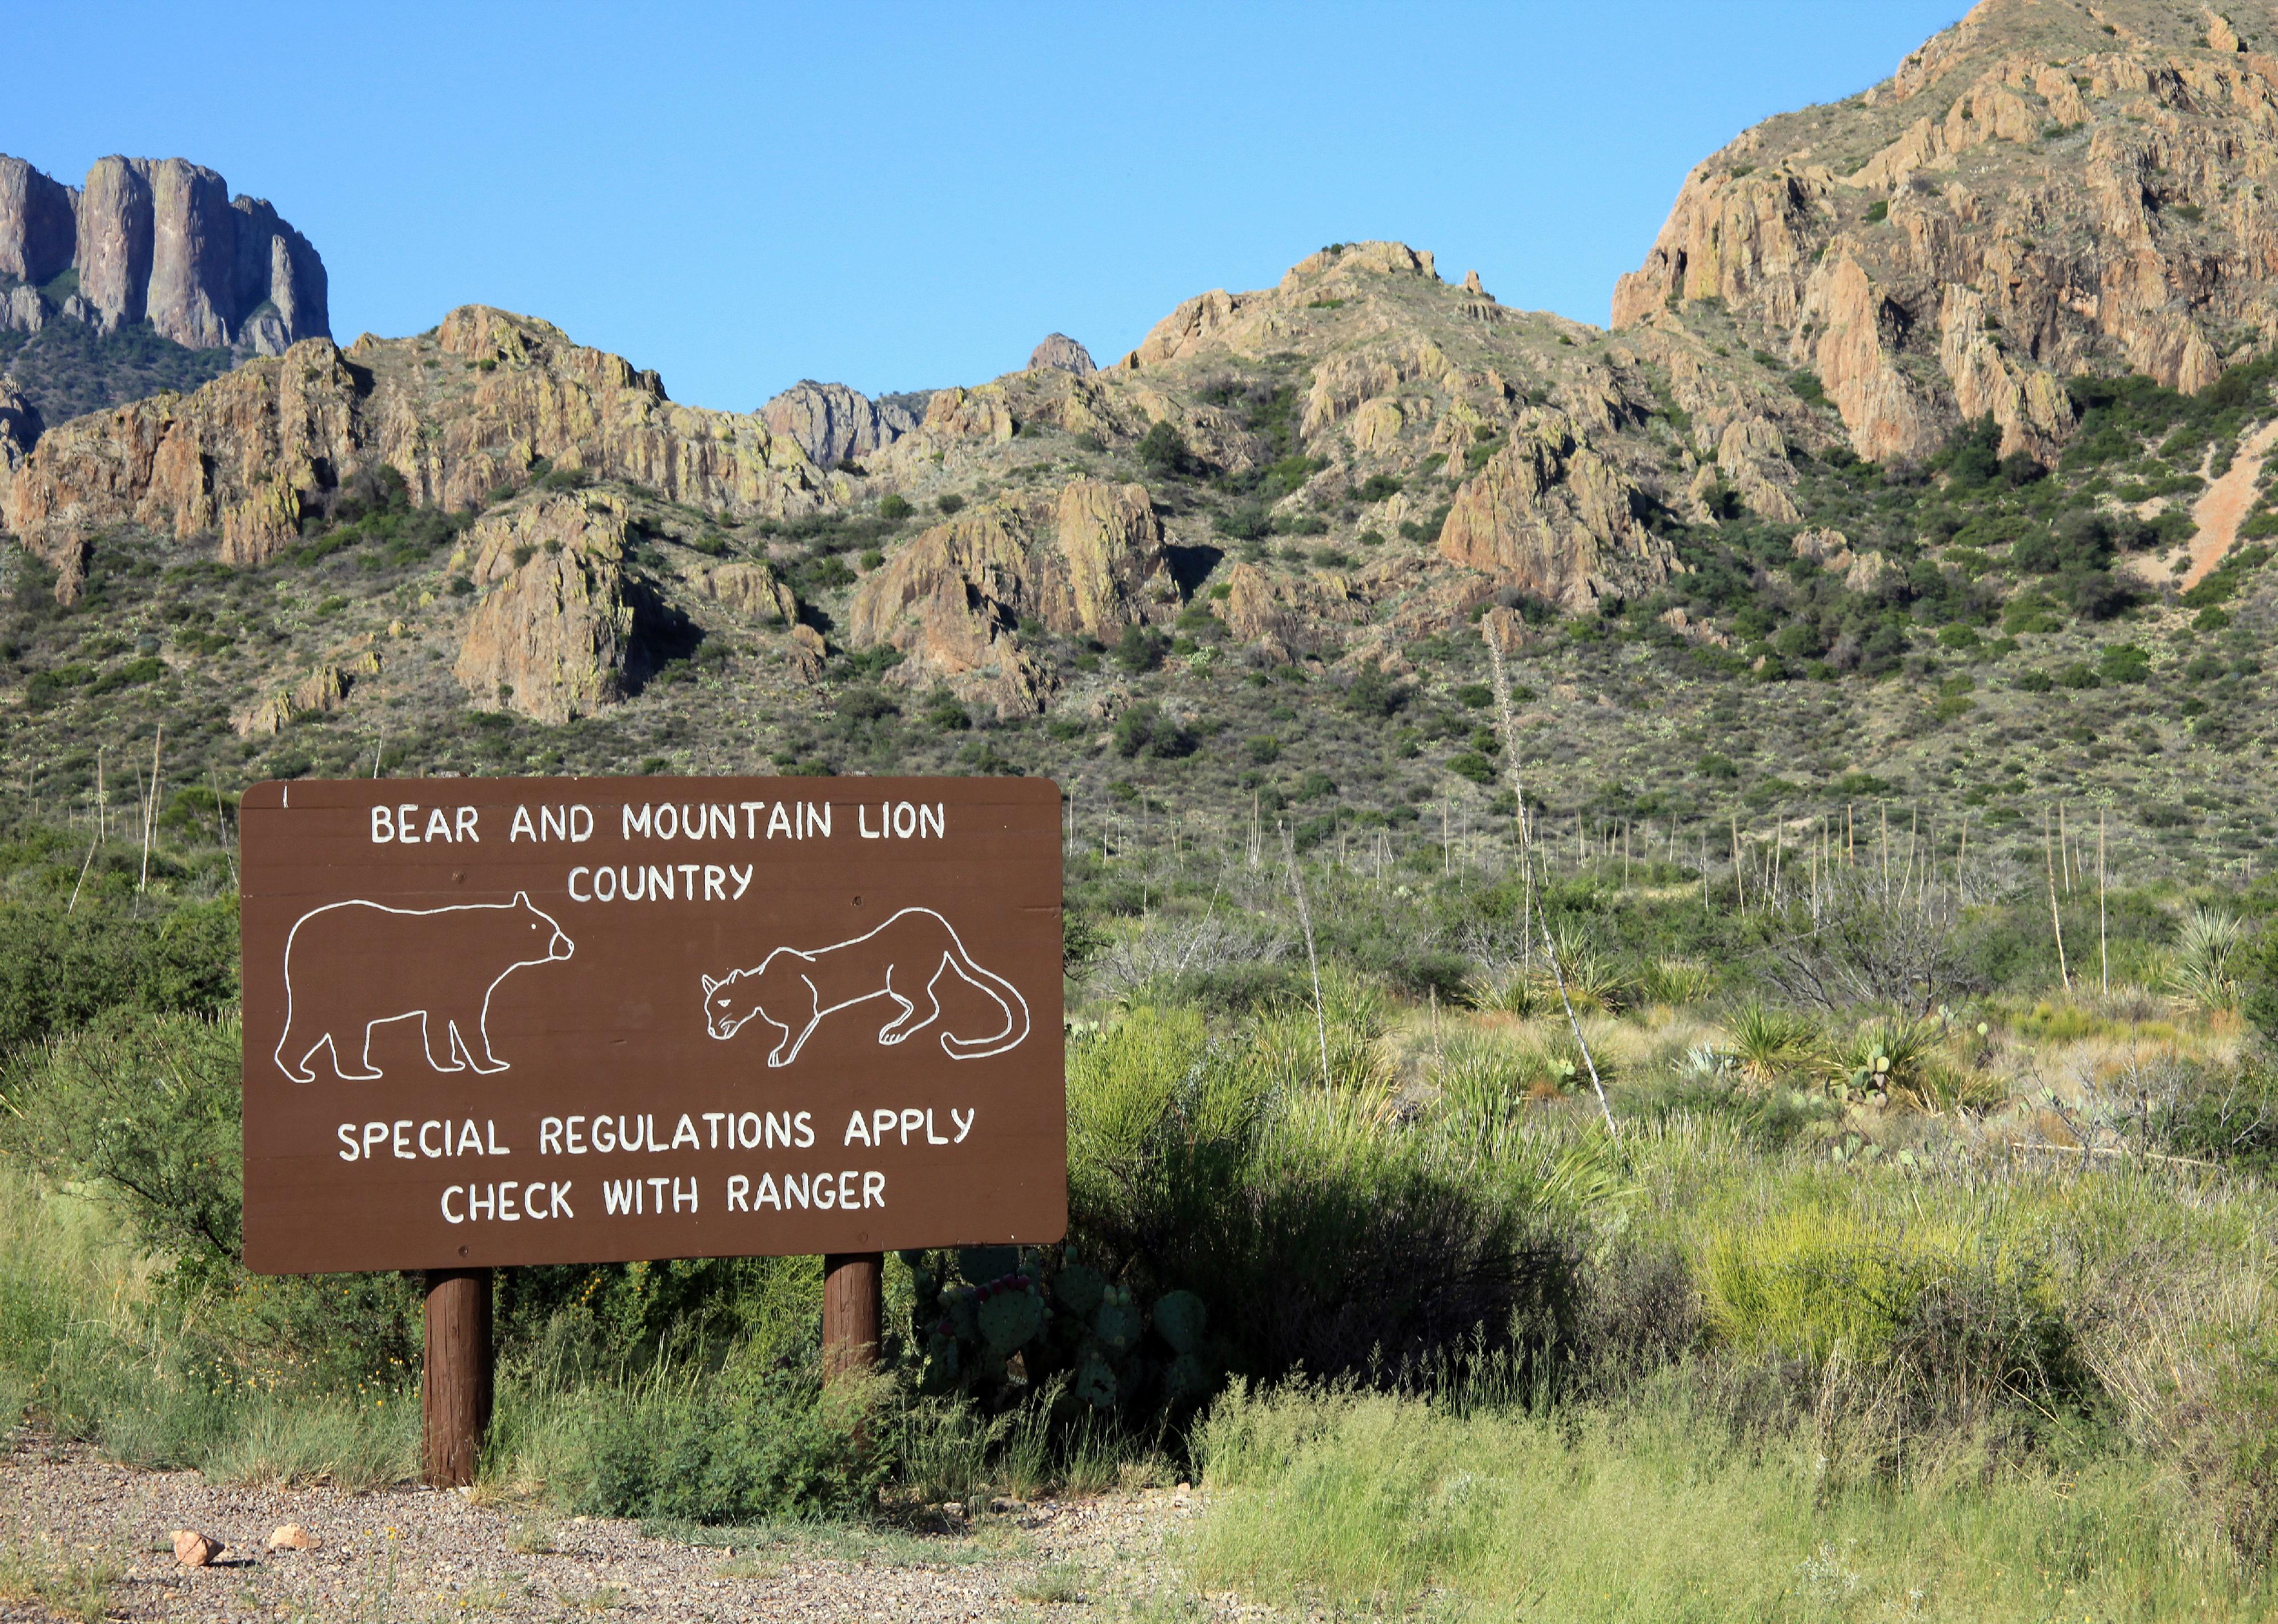 Bear warning sign in Big Bend National Park.